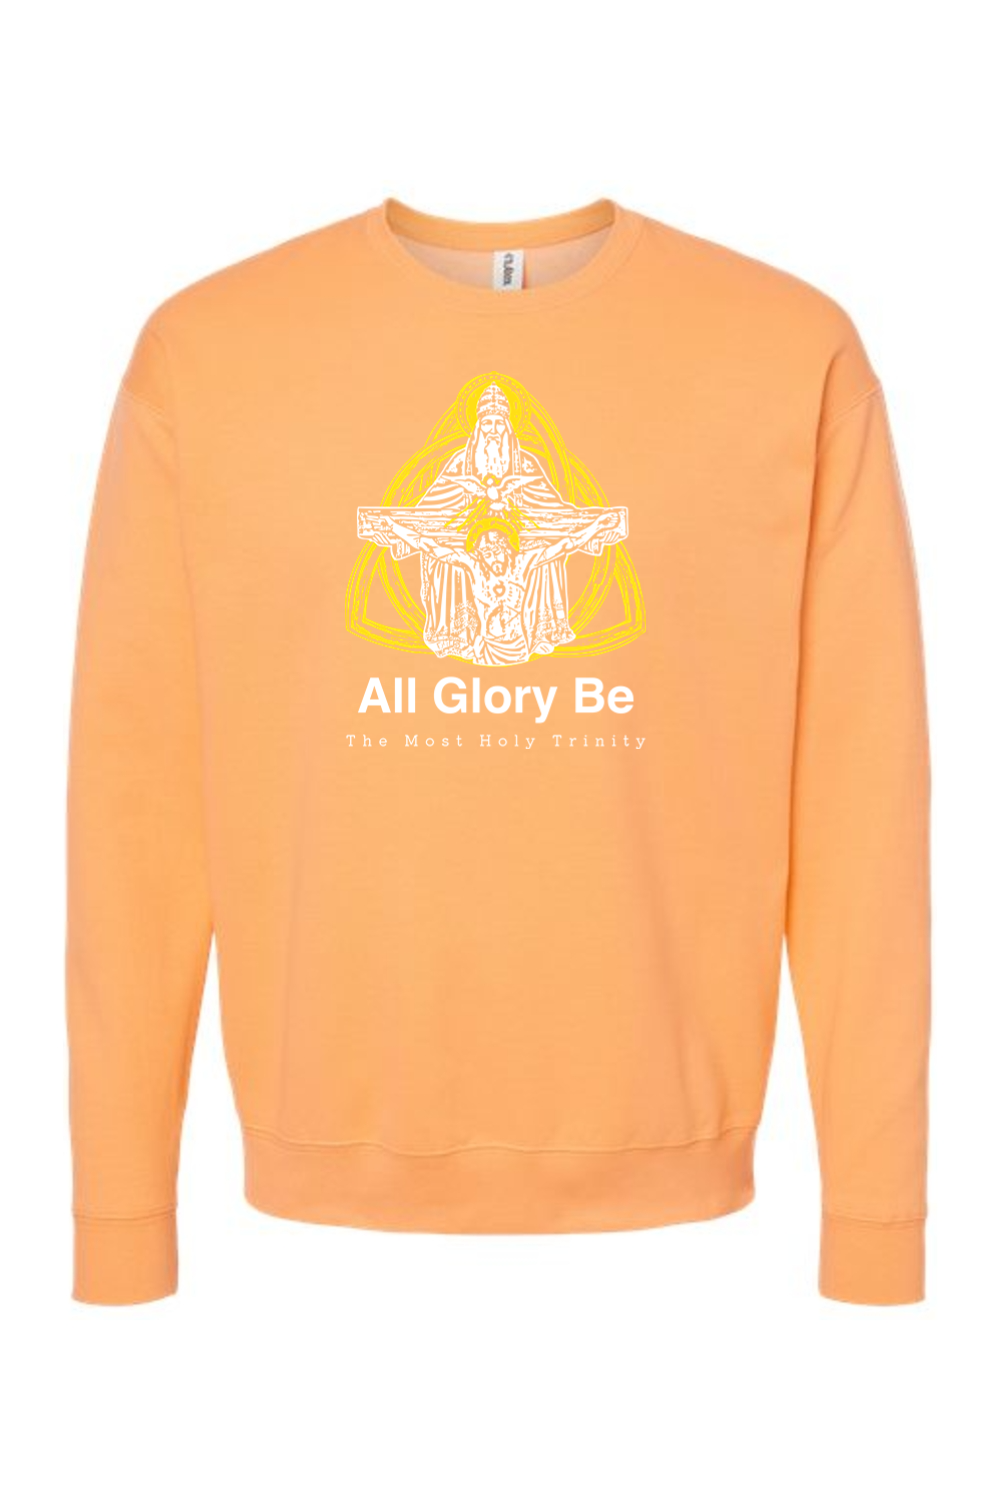 All Glory Be - Crewneck Sweatshirt